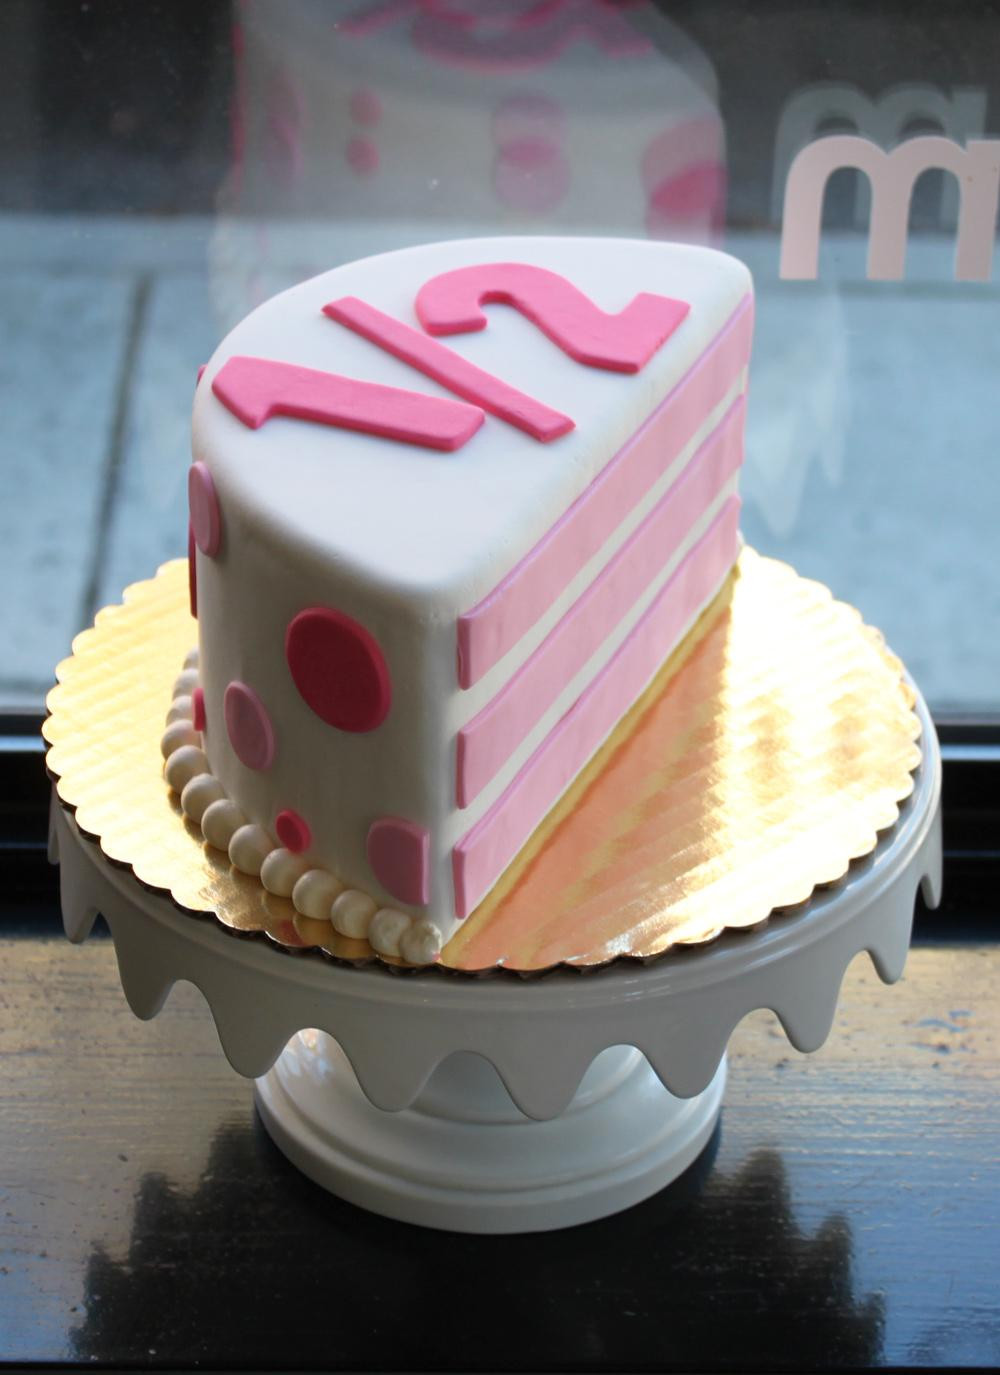 Best ideas about Half Birthday Cake
. Save or Pin Half Birthday Cake Now.